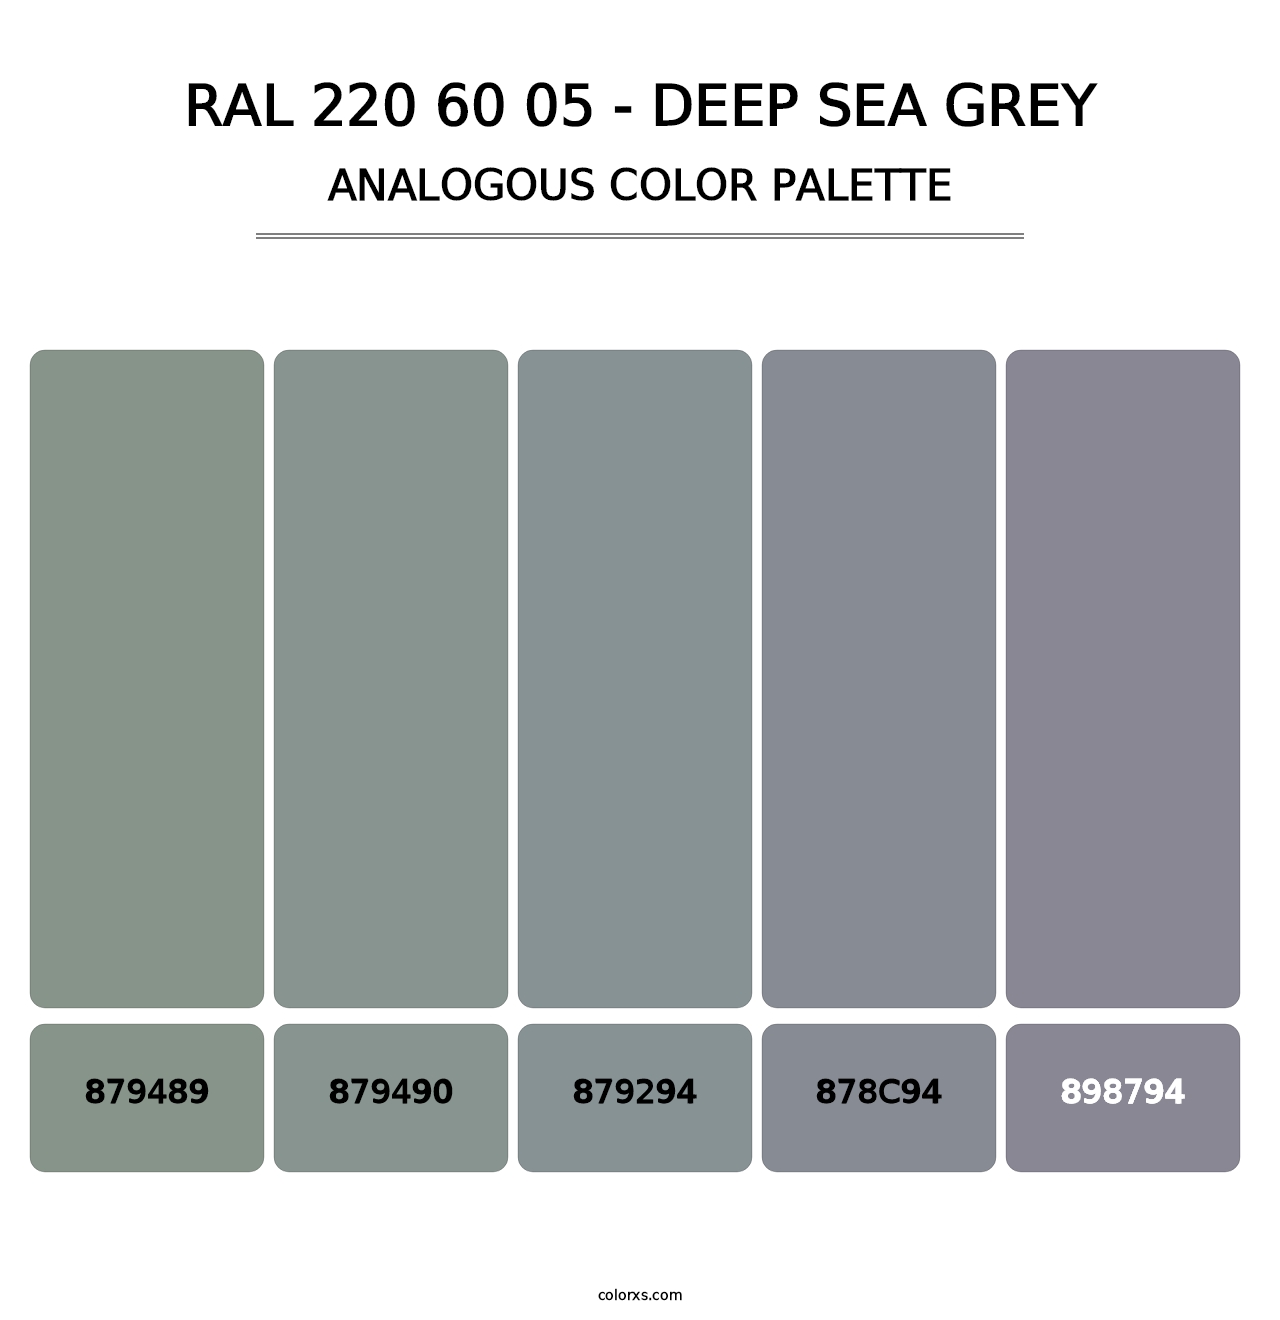 RAL 220 60 05 - Deep Sea Grey - Analogous Color Palette